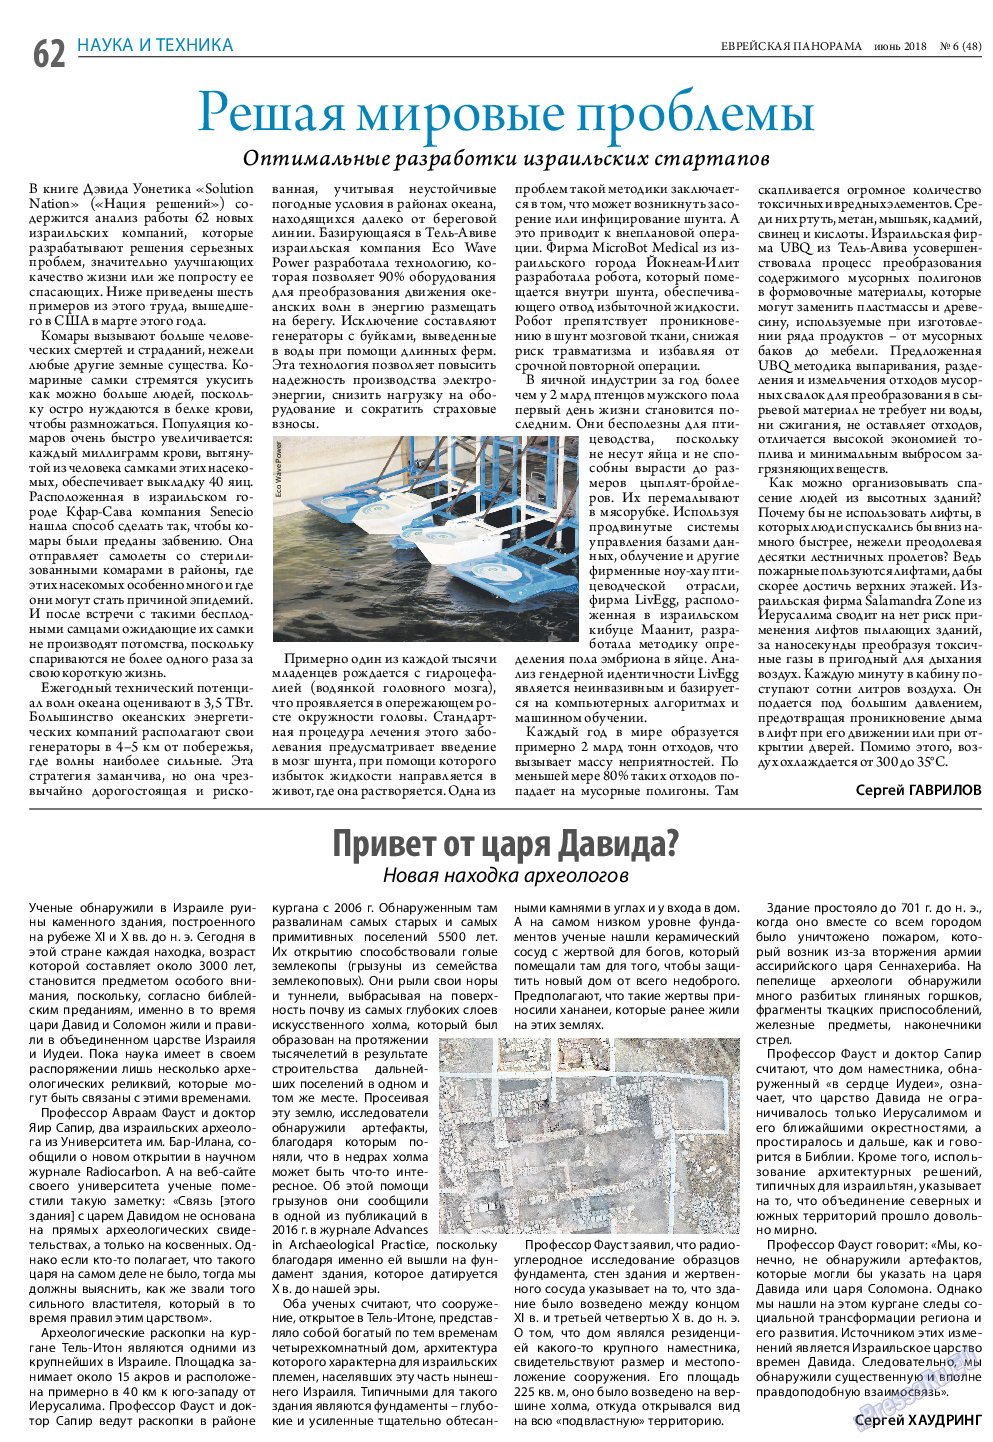 Еврейская панорама, газета. 2018 №6 стр.62